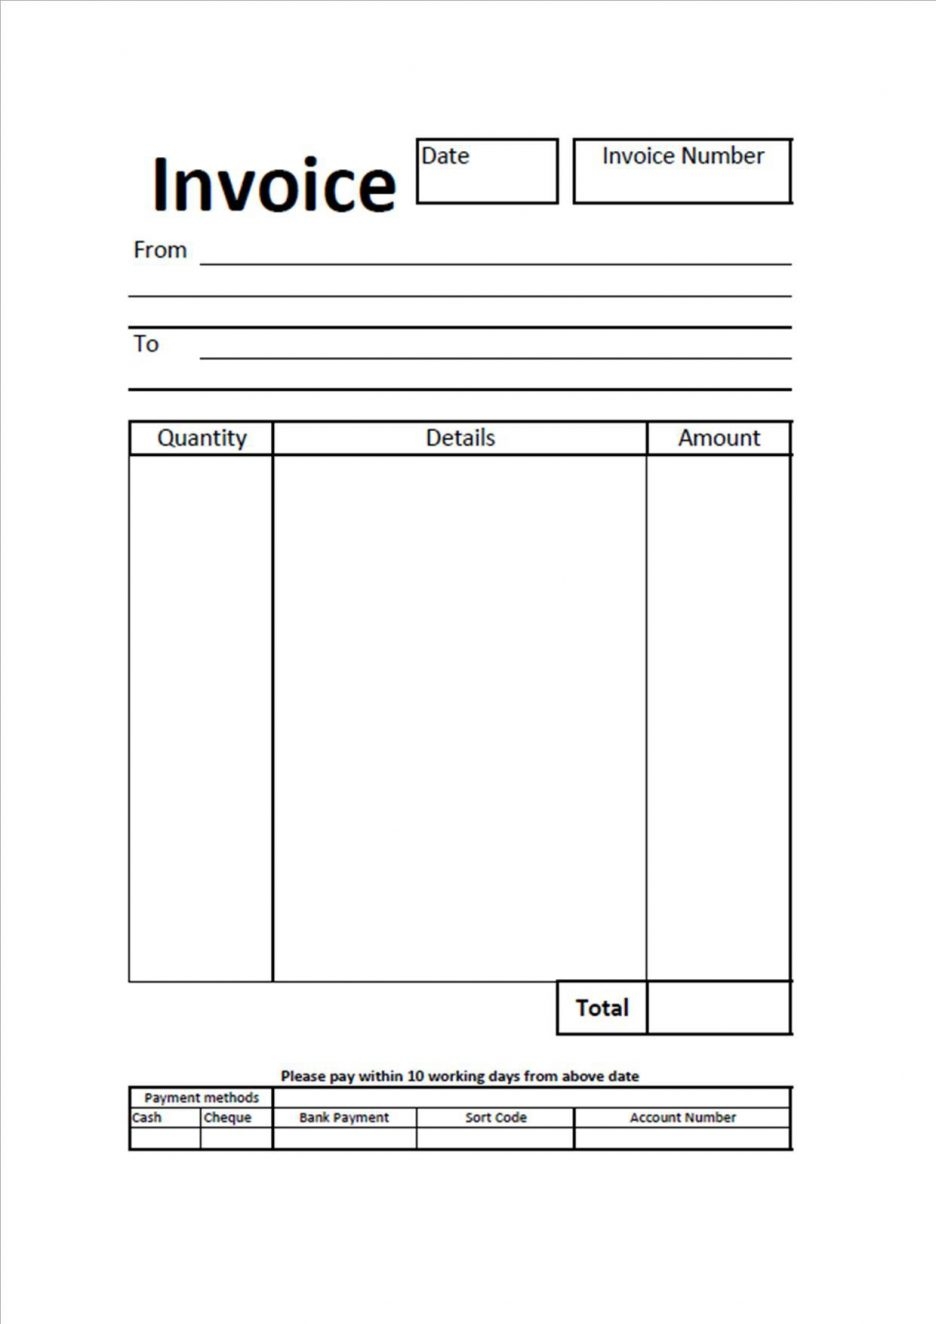 blank invoice document residers blank invoice document